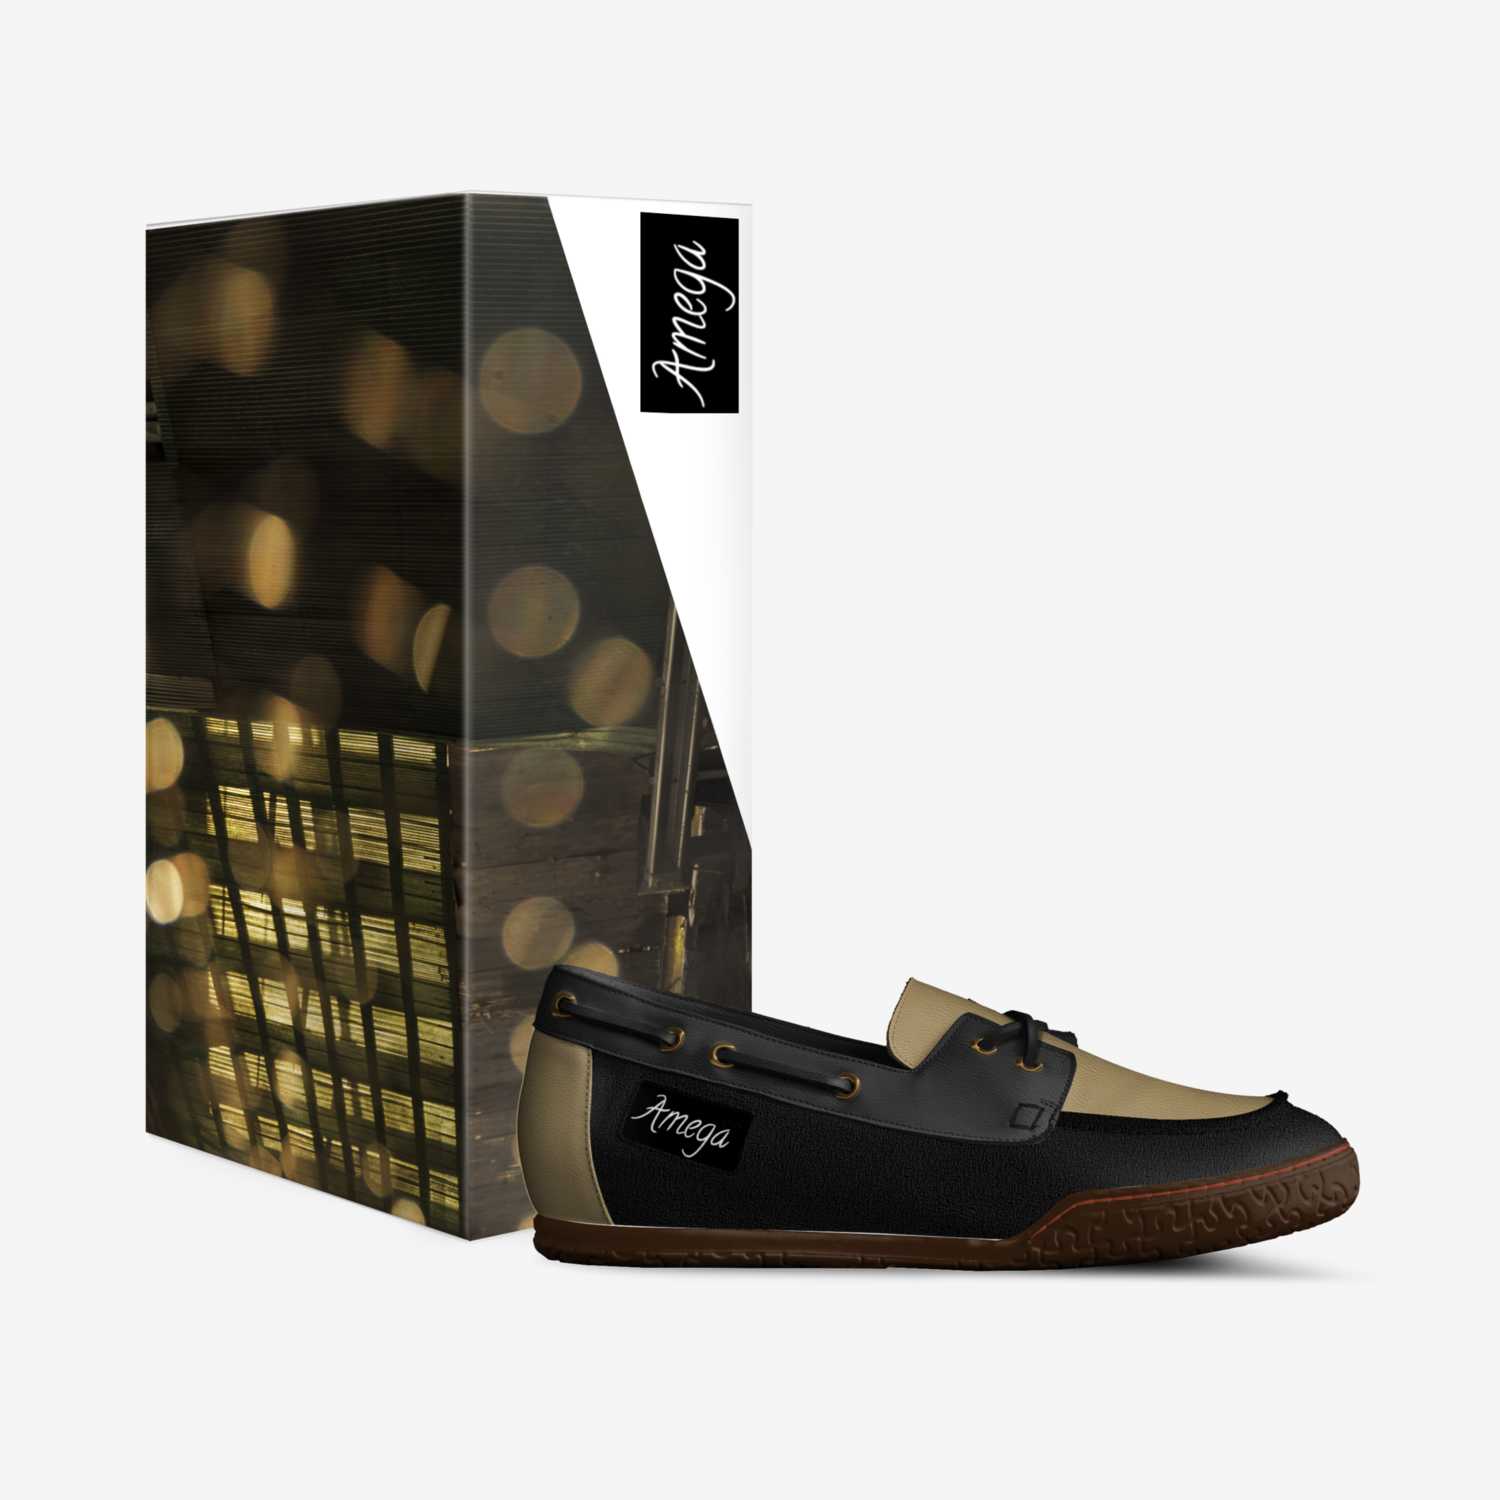 amega custom made in Italy shoes by Eyram Tsegah | Box view